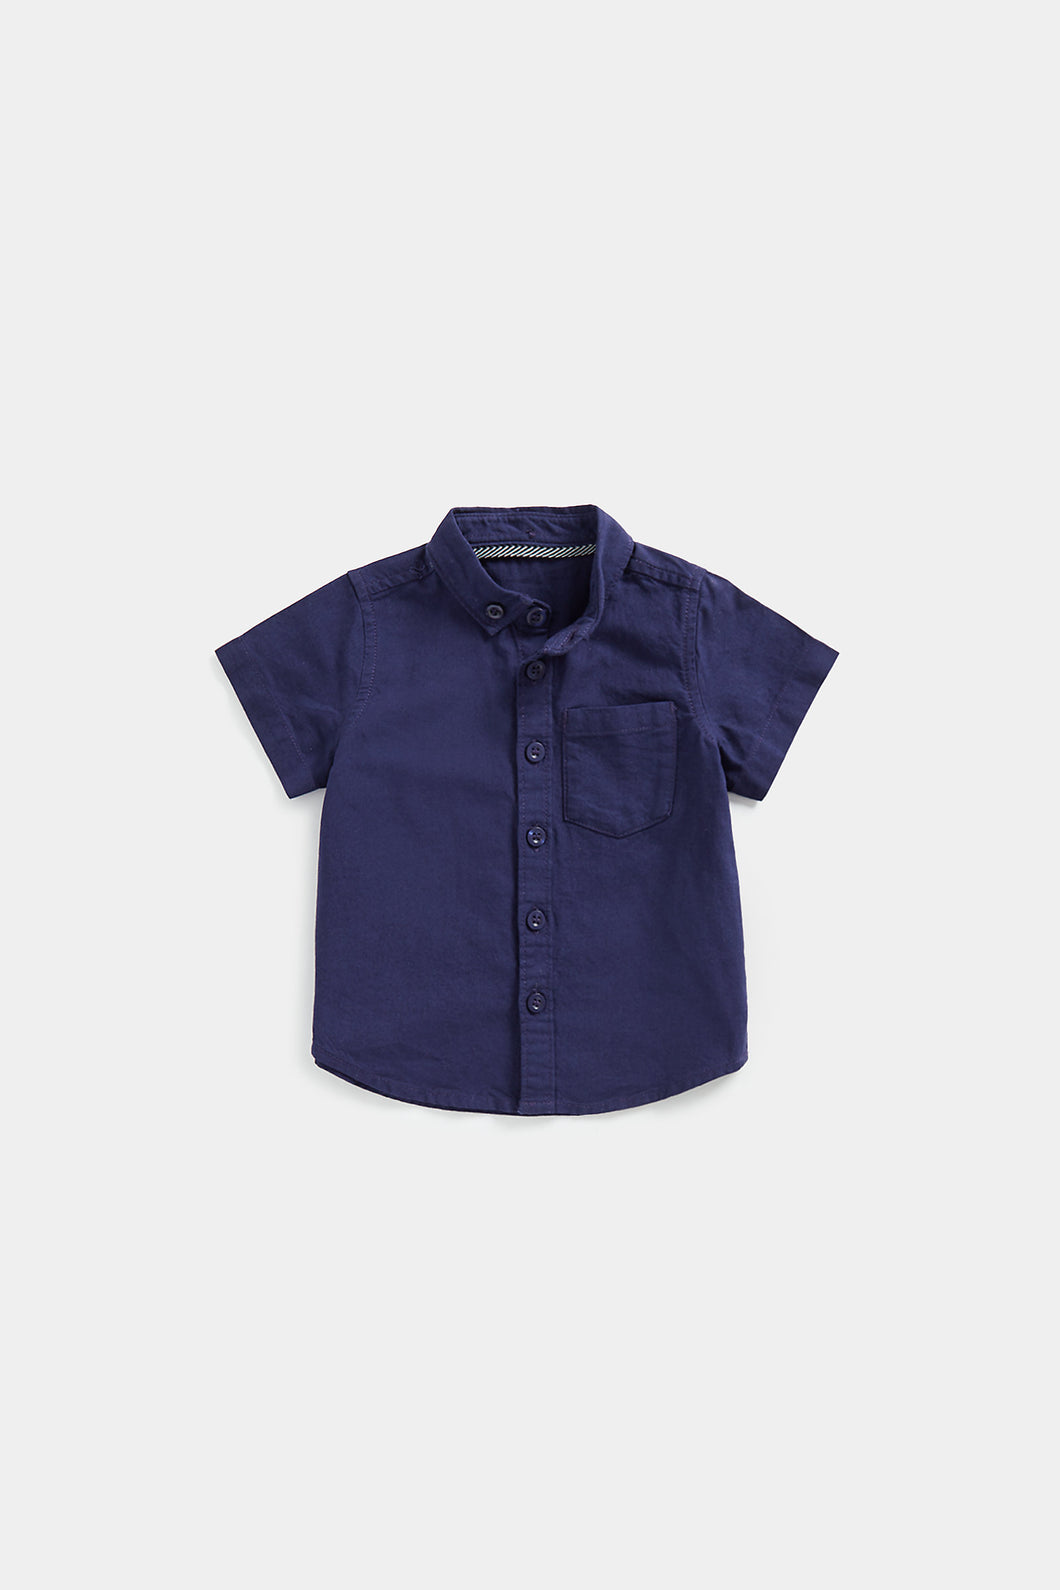 Mothercare Navy Short-Sleeved Shirt